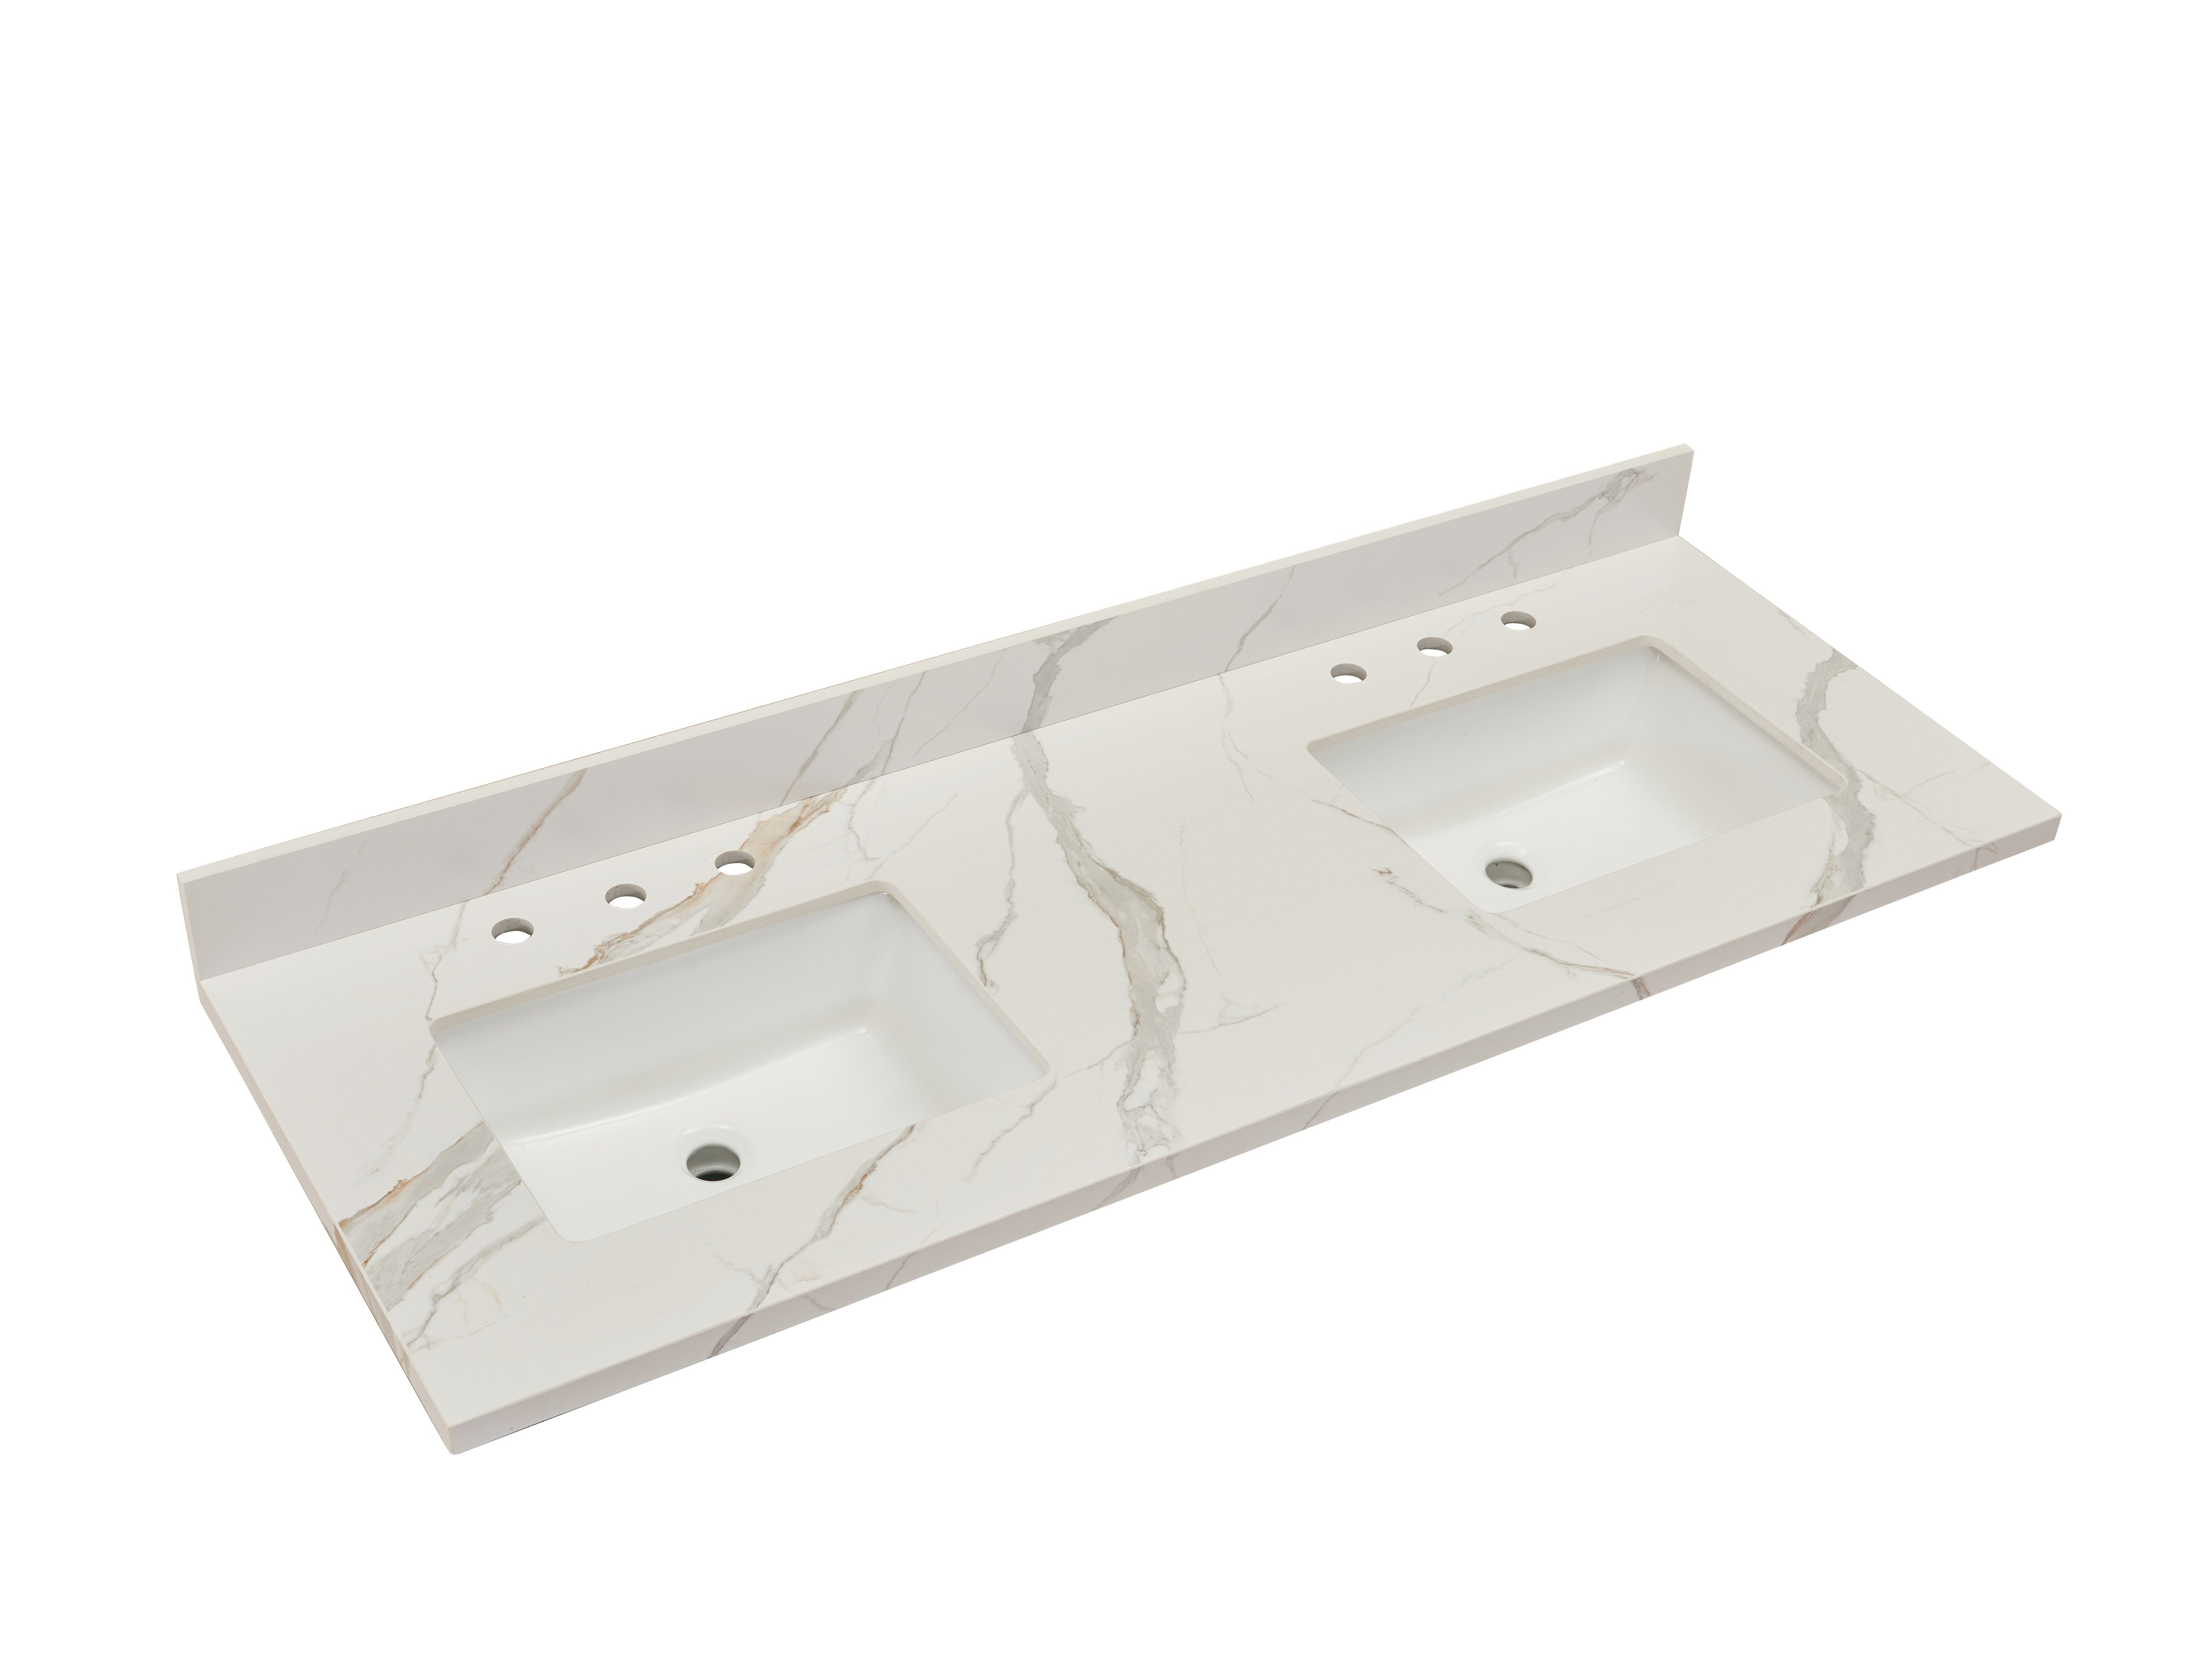 Eivissia Double Sink Bathroom Vanity Countertop in Calacatta White